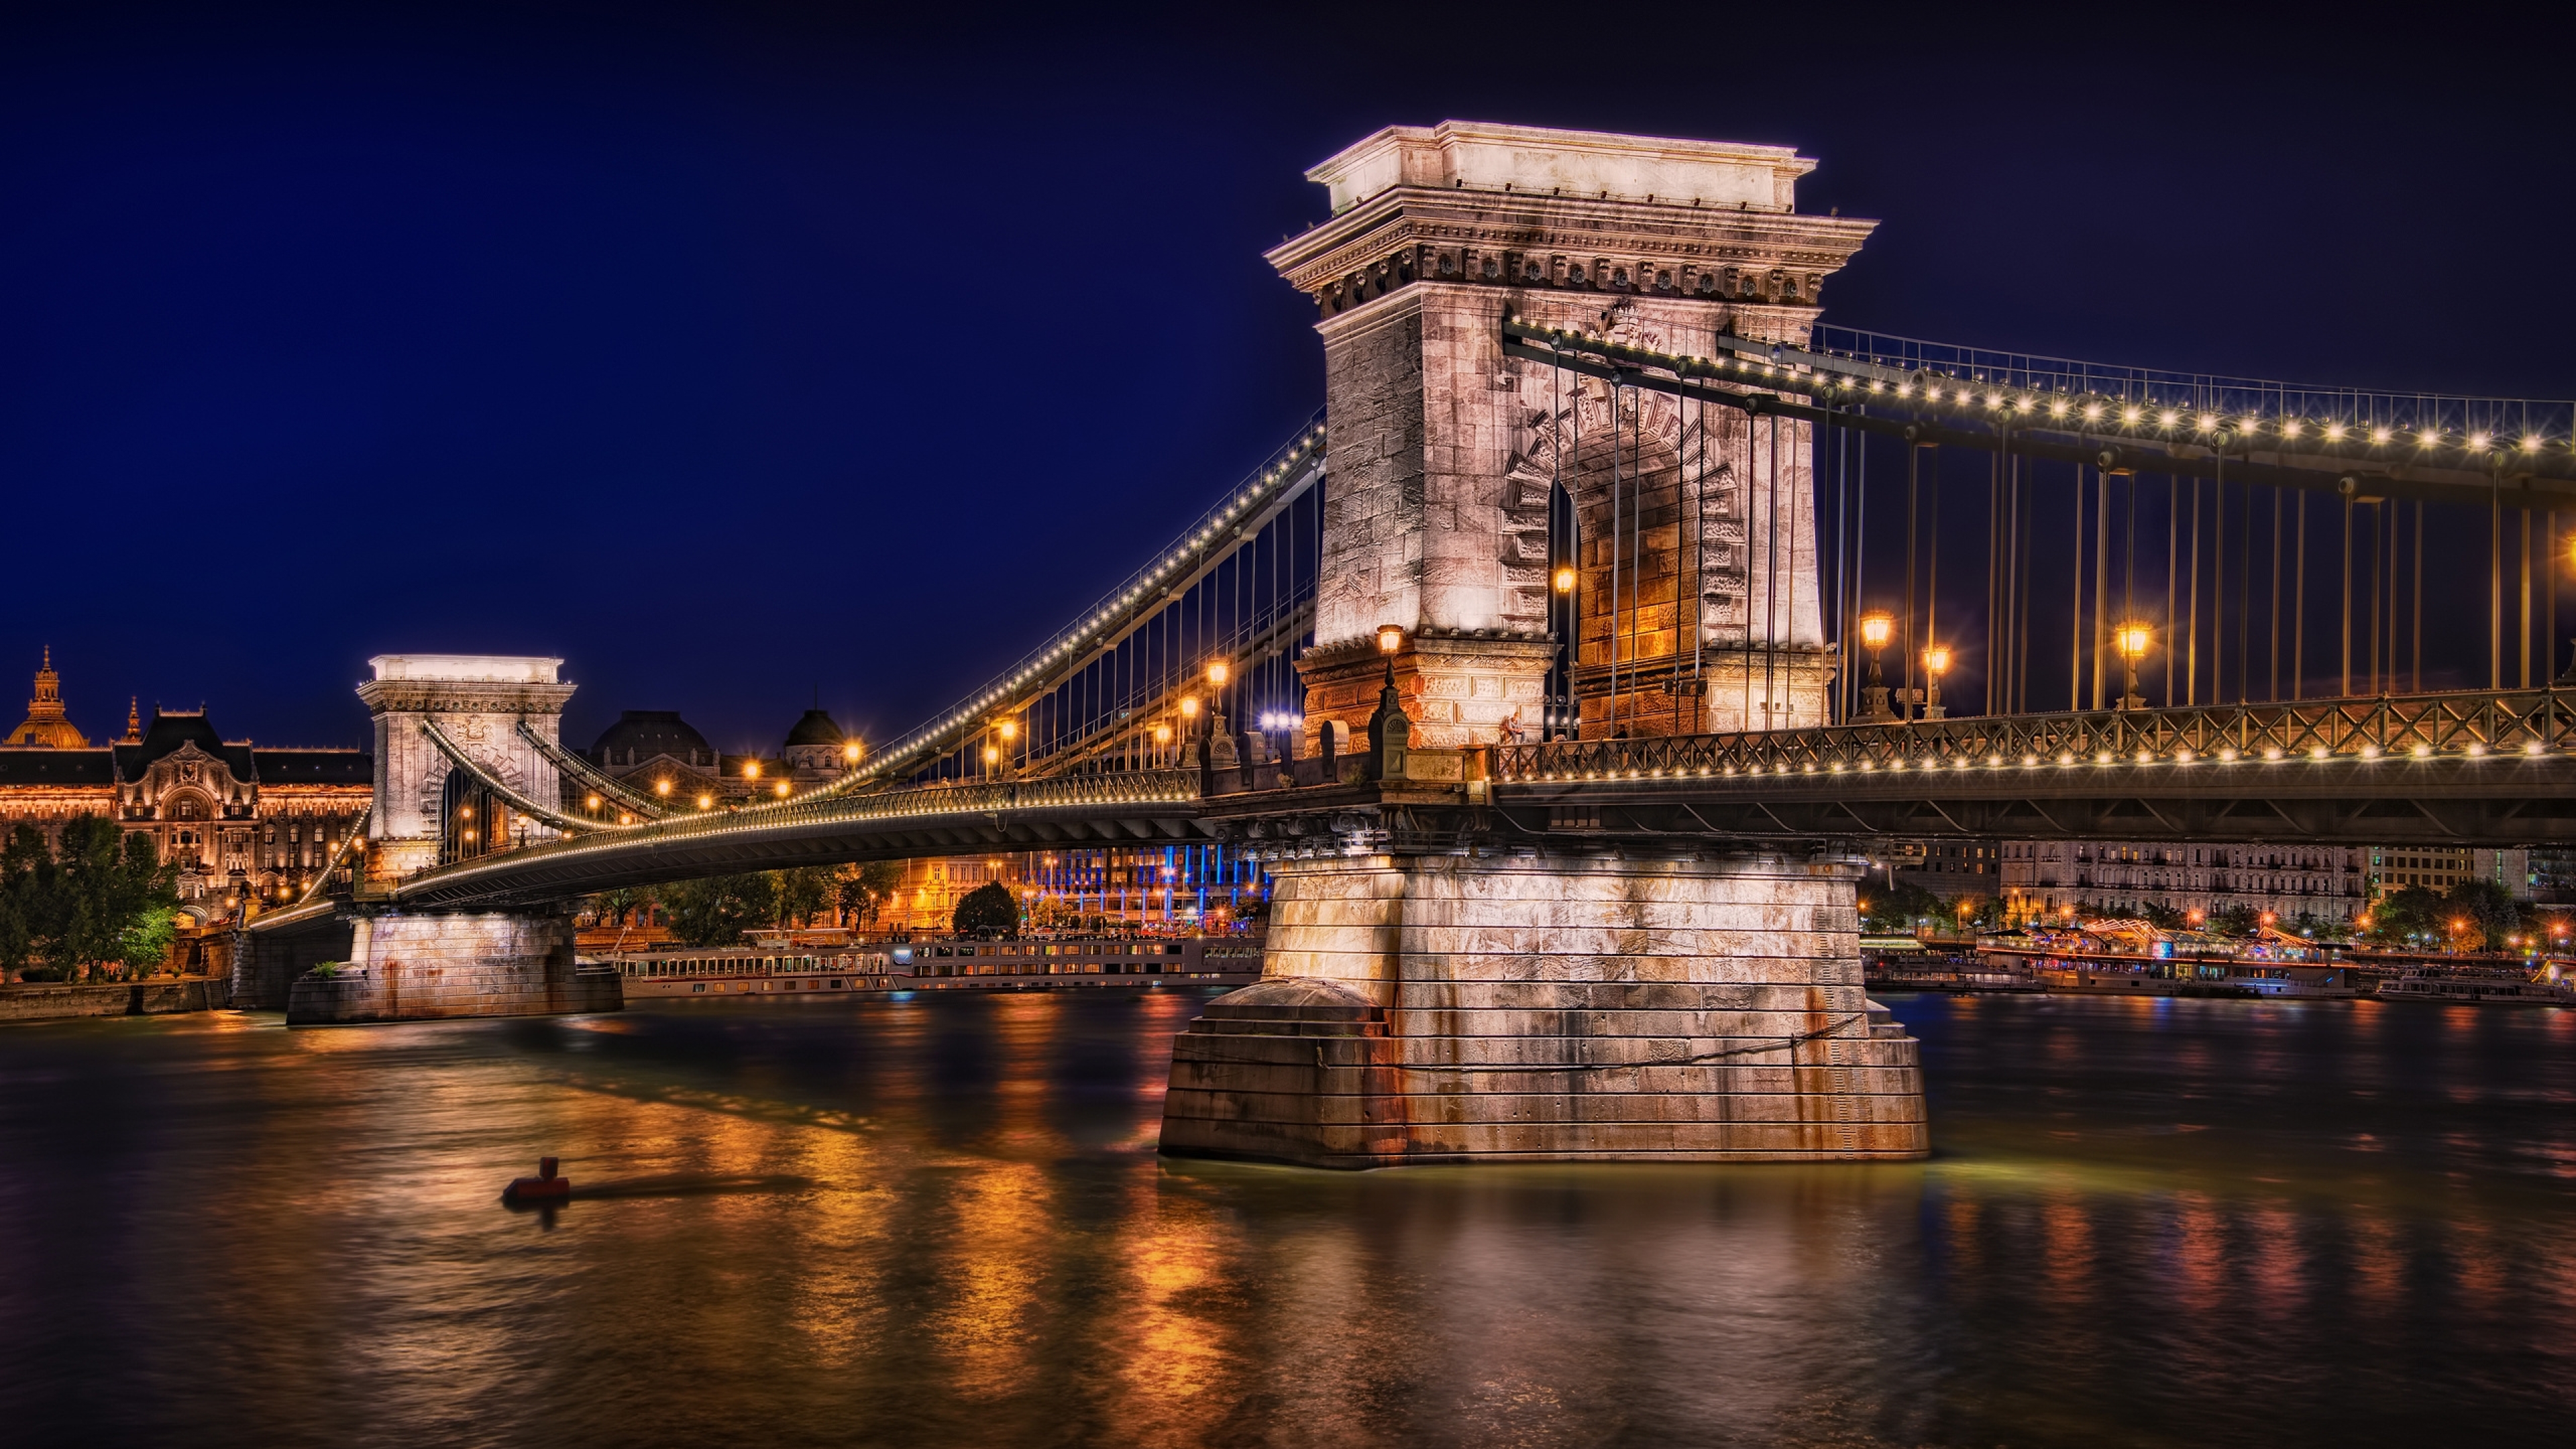 Картинки на рабочий. Будапешт. Открытка Будапешт цепной мост 1852г. Мост Будапешт на рабочий стол. Цепной мост обои Венгрия.